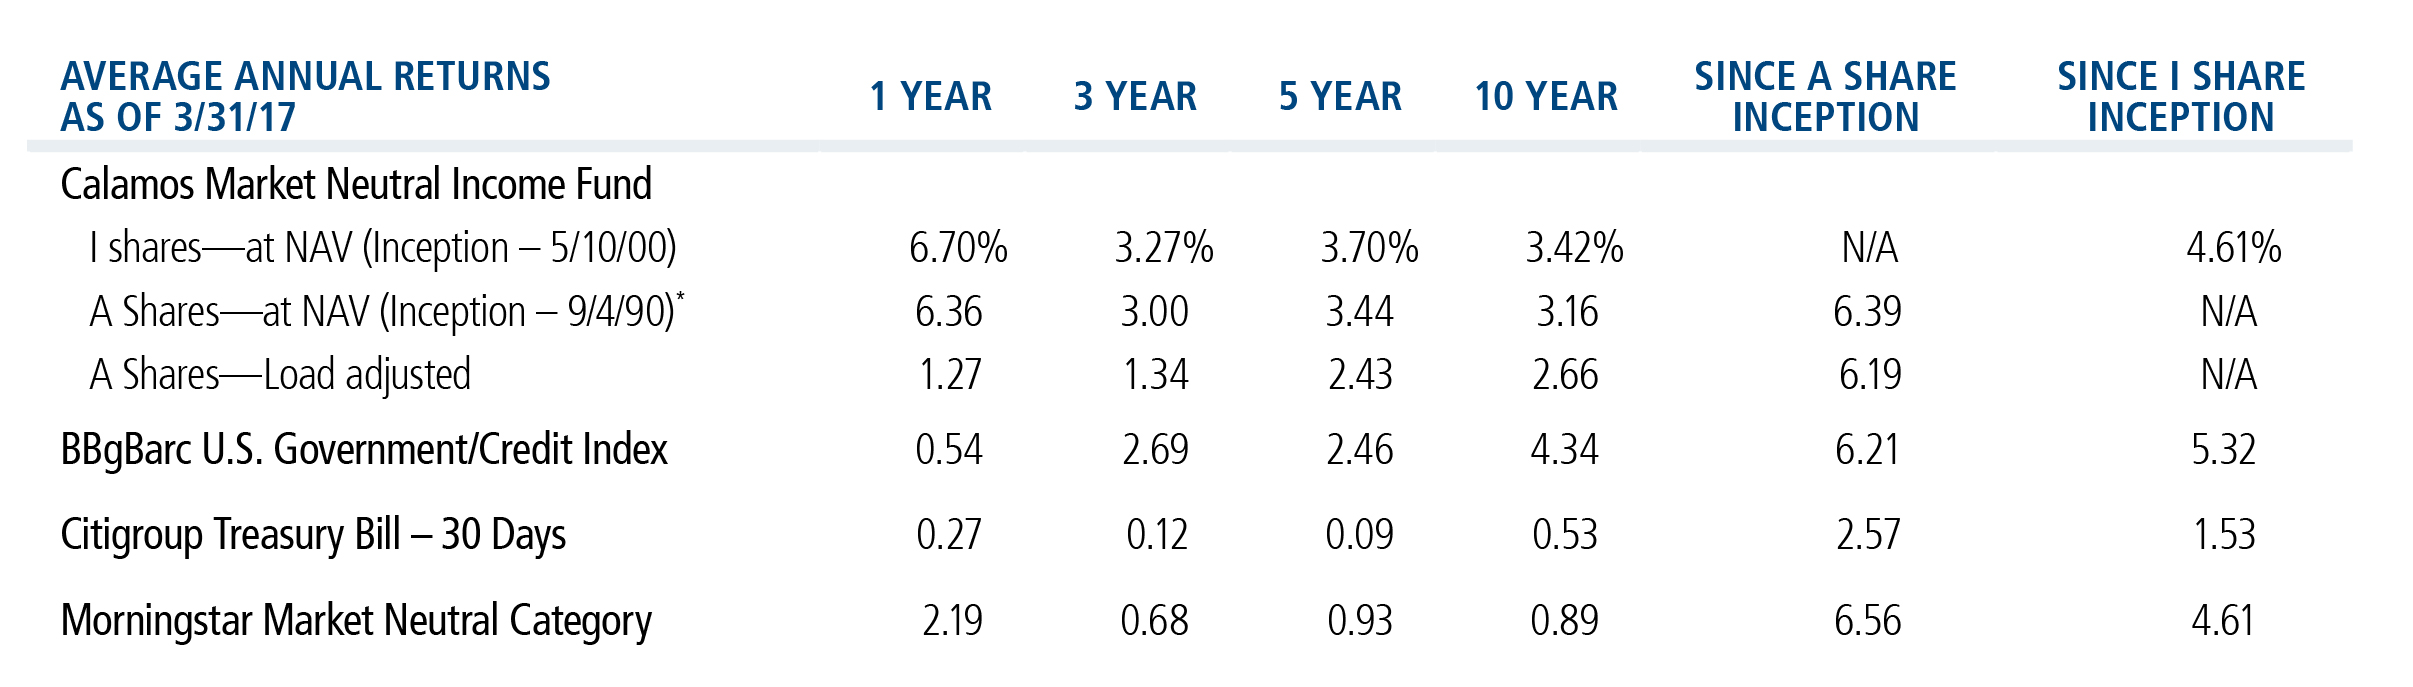 Calamos Market Neutral Income fund average annual returns